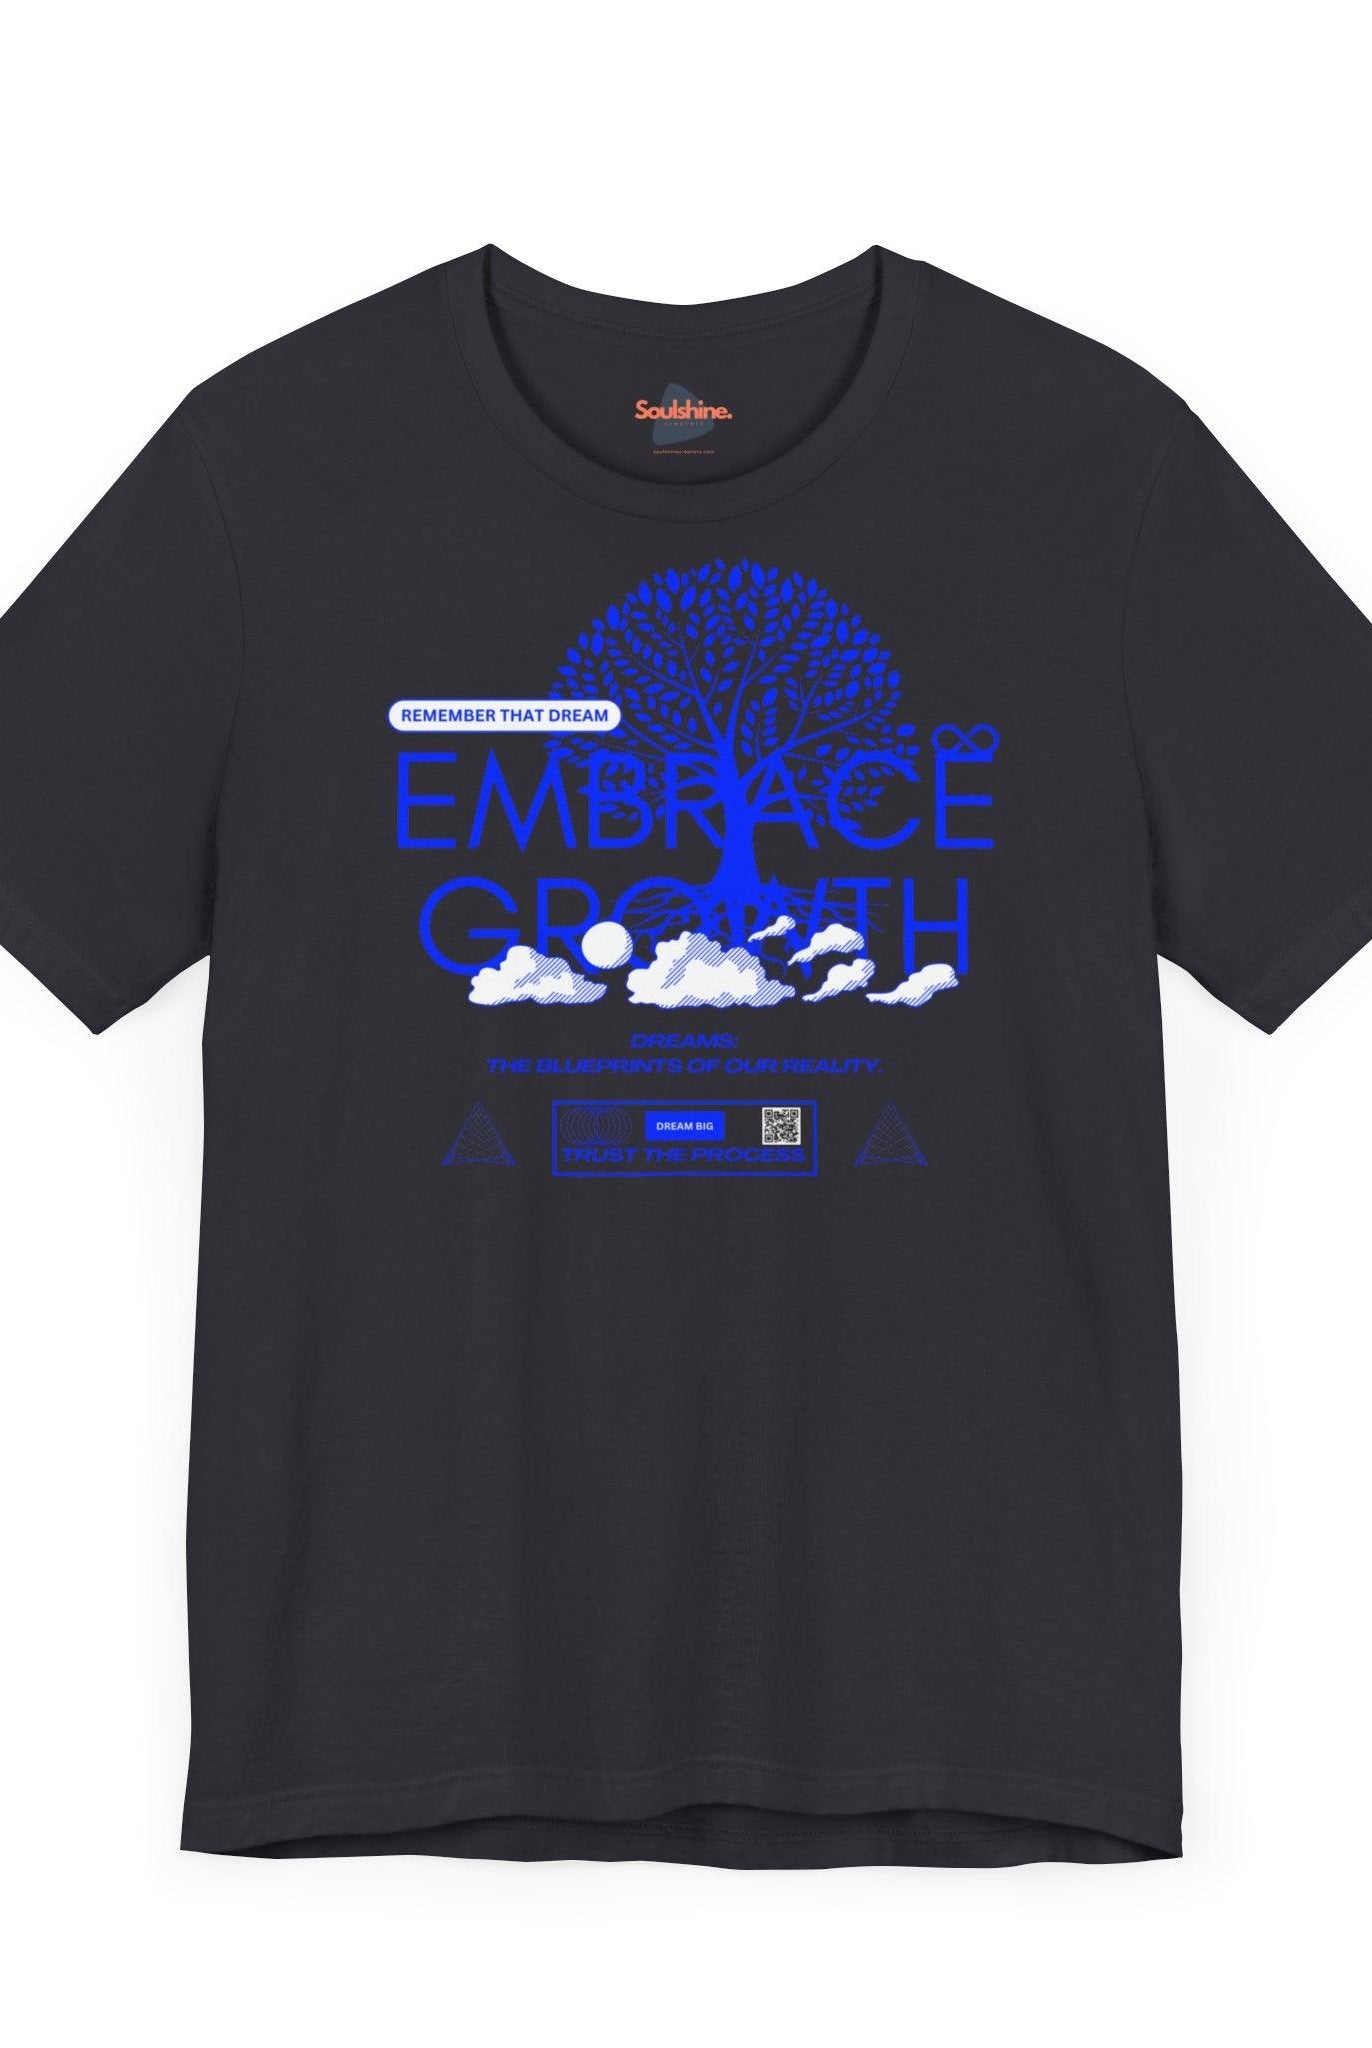 Embrace growth - Inspirational T-Shirt - Soulshinecreators - Bella & Canvas - EU - Soulshinecreators